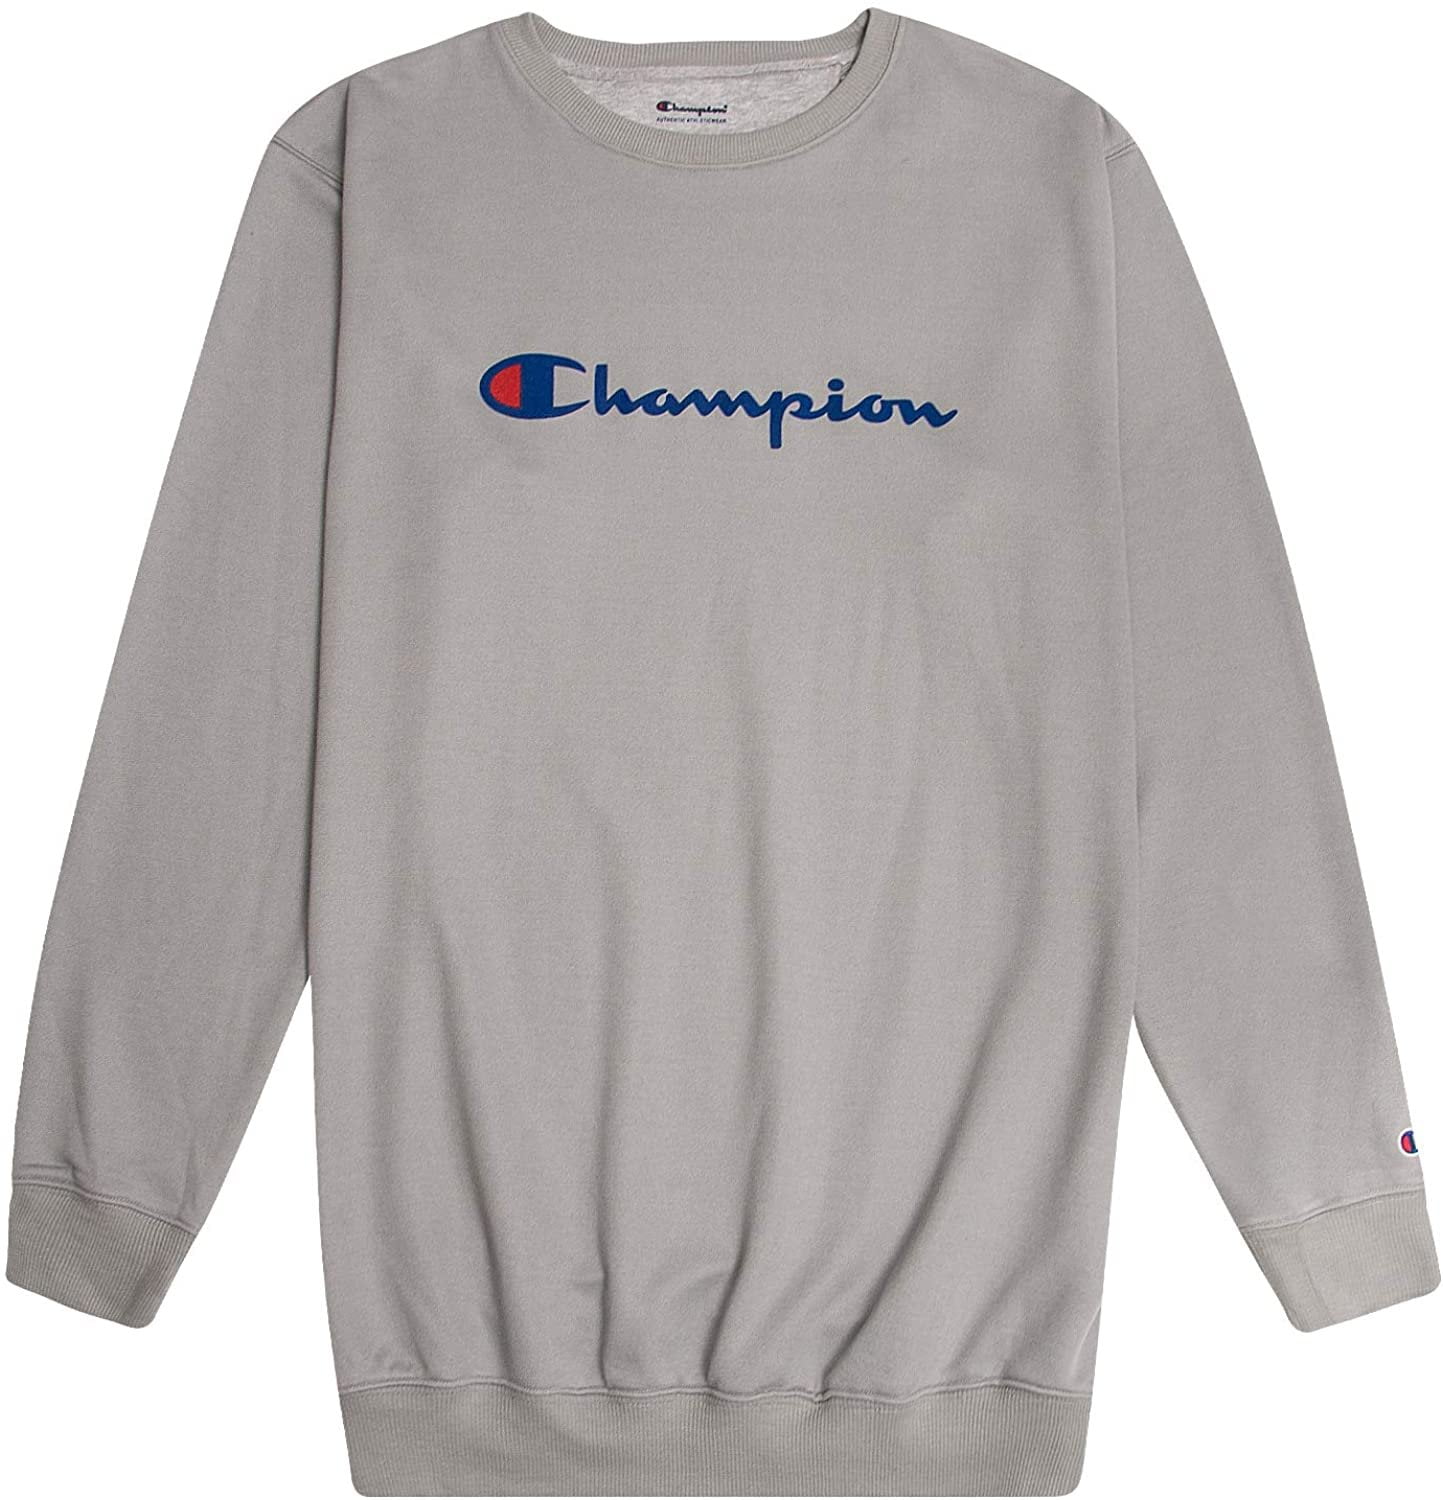 Brand: Champion - Champion Sweatshirt Mens Big and Tall Logo Sweater ...